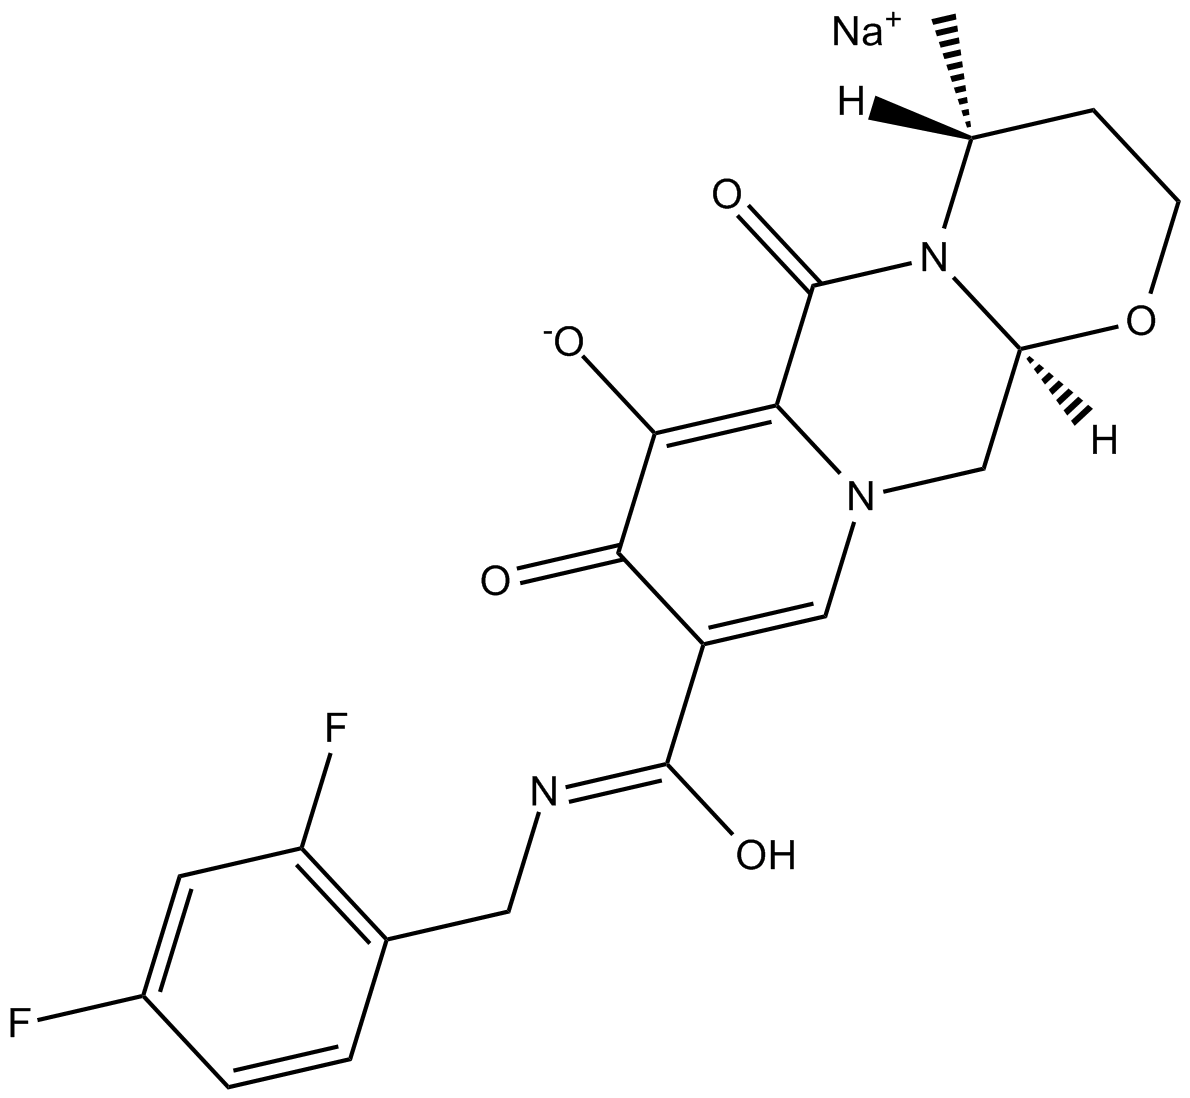 GSK1349572 sodiuM salt  Chemical Structure